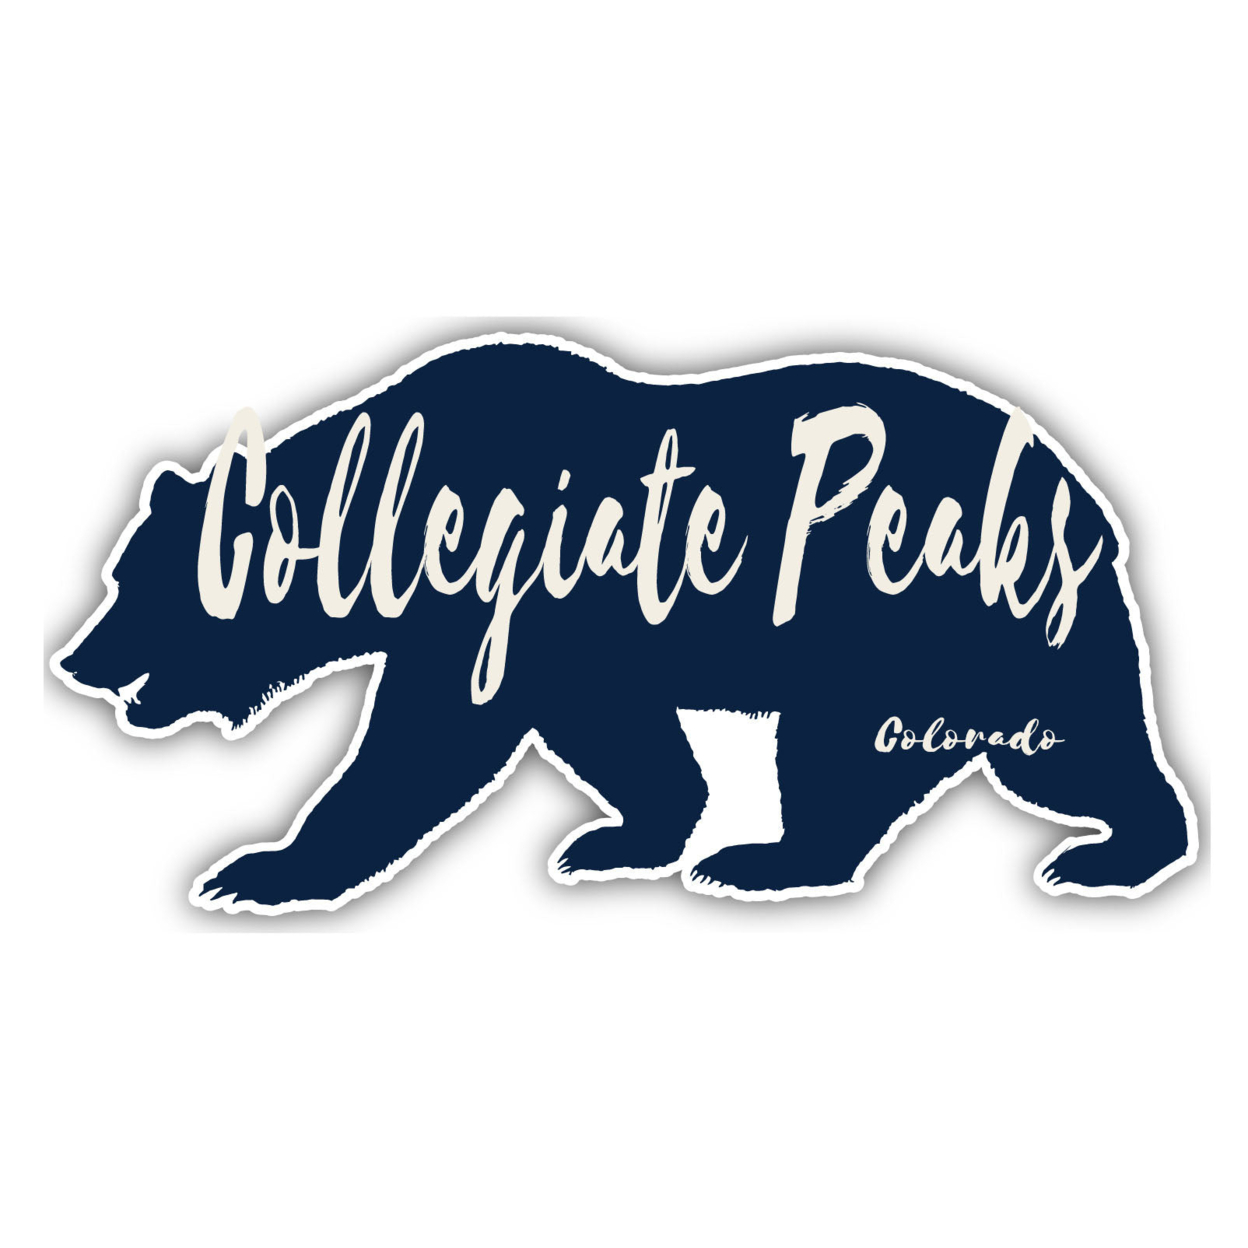 Collegiate Peaks Colorado Souvenir Decorative Stickers (Choose Theme And Size) - 4-Pack, 4-Inch, Tent